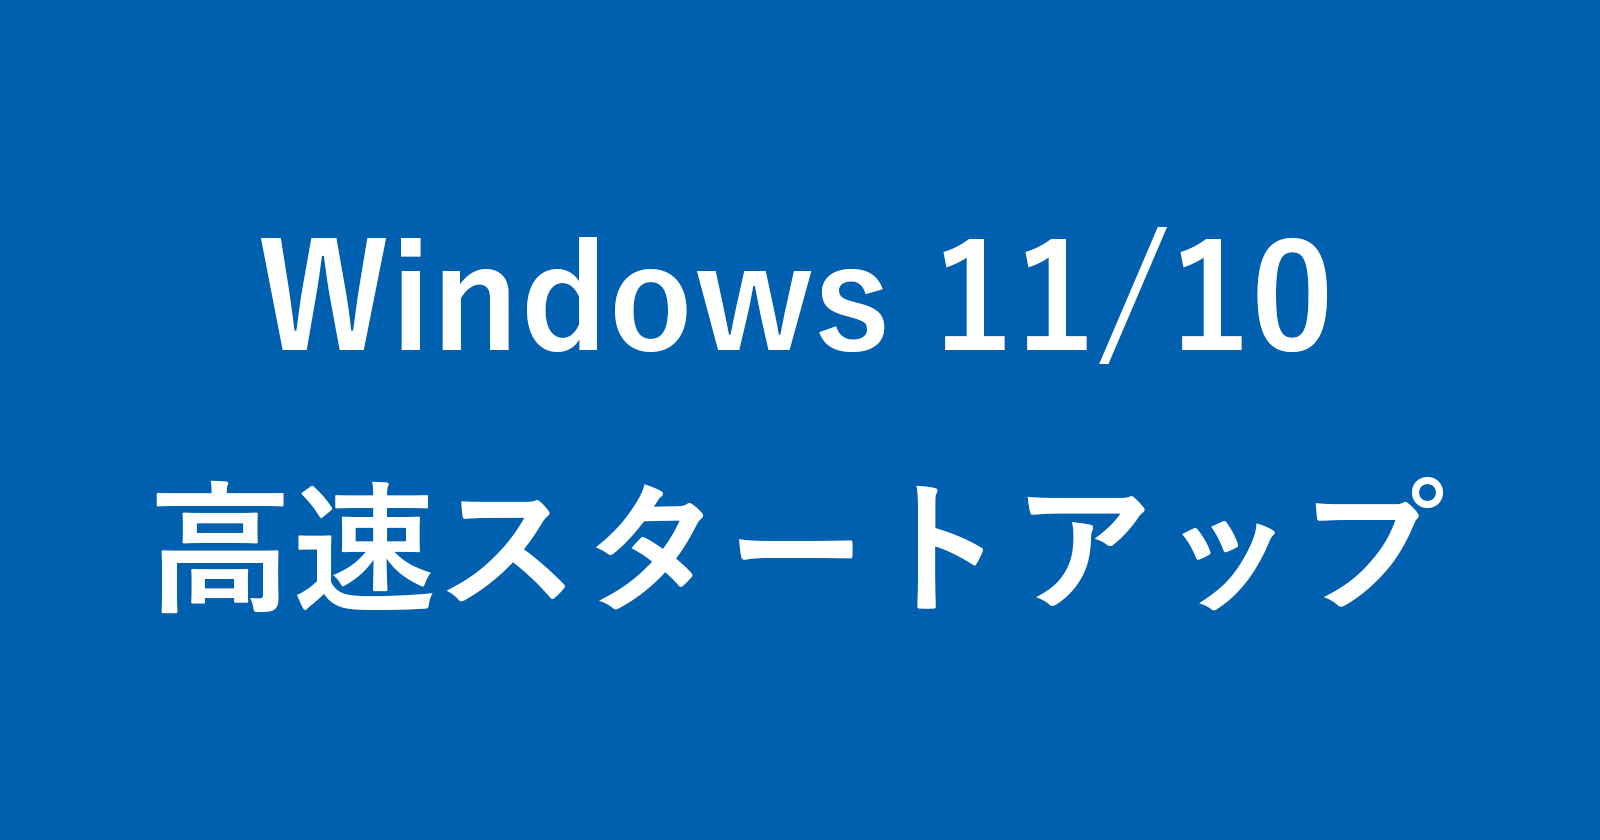 windows 11 10 fast startup